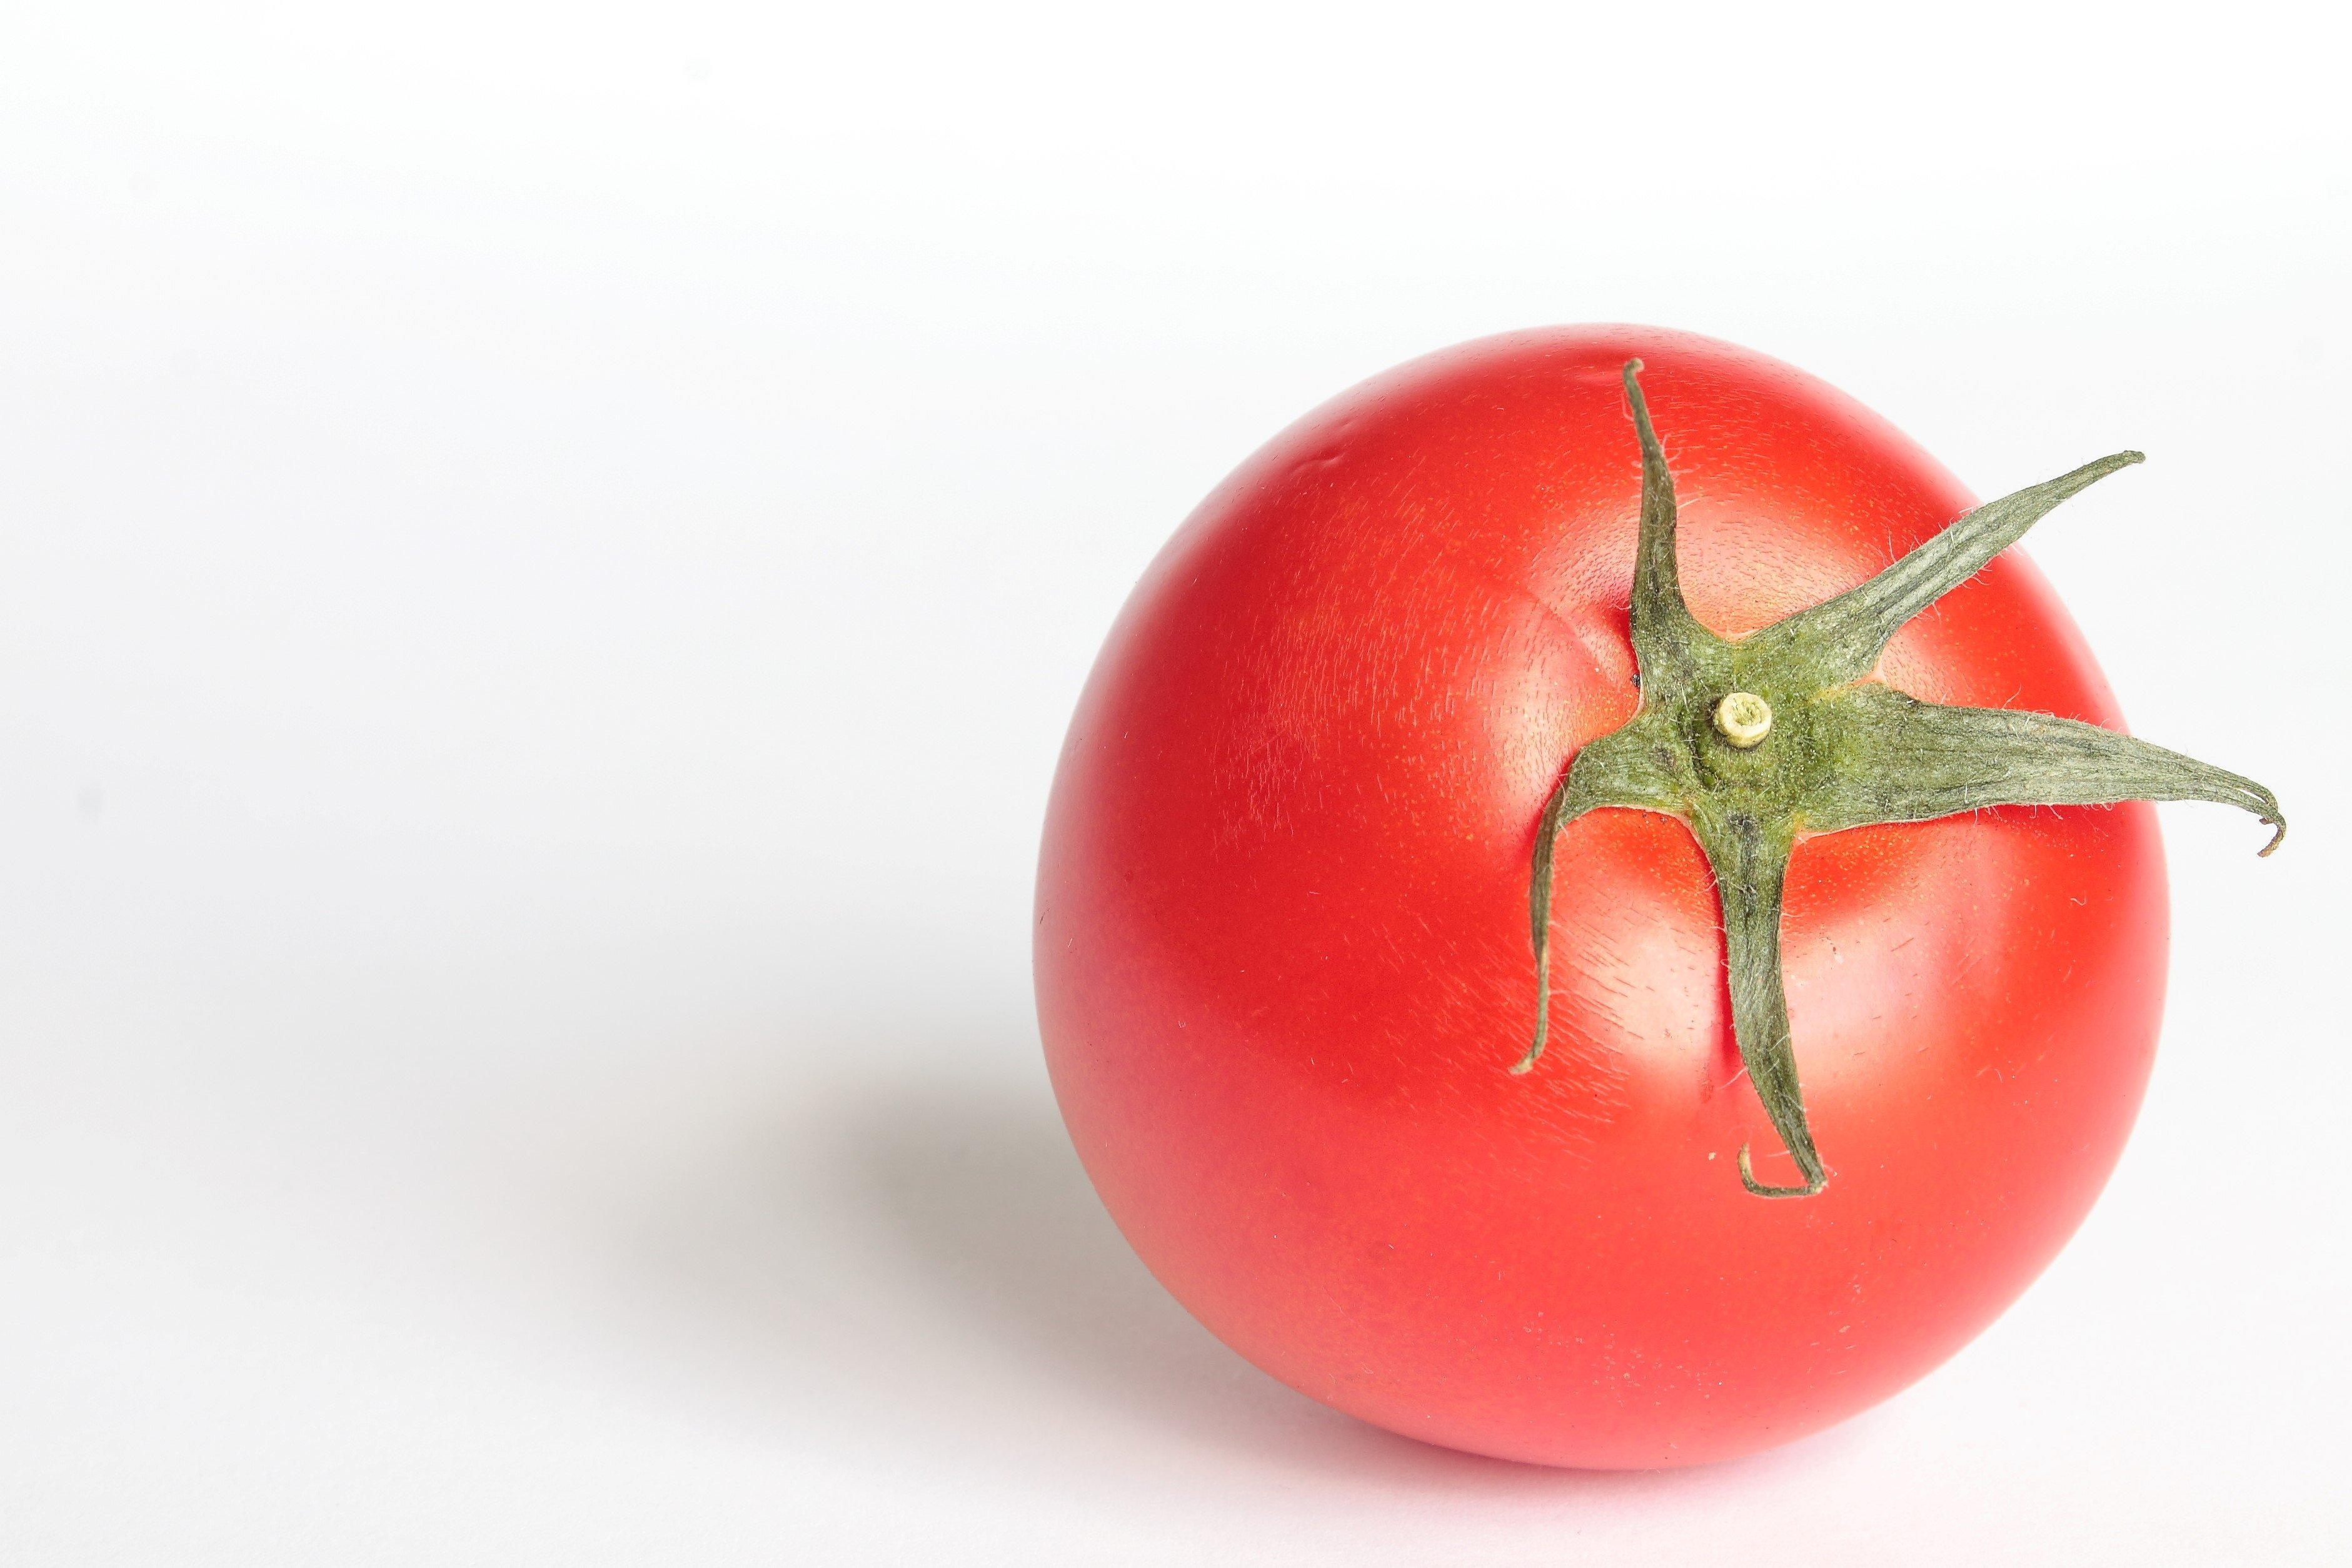 Tomato red. Помидор. Овощи красного цвета. Овощи помидор. Помидор красный цвета.